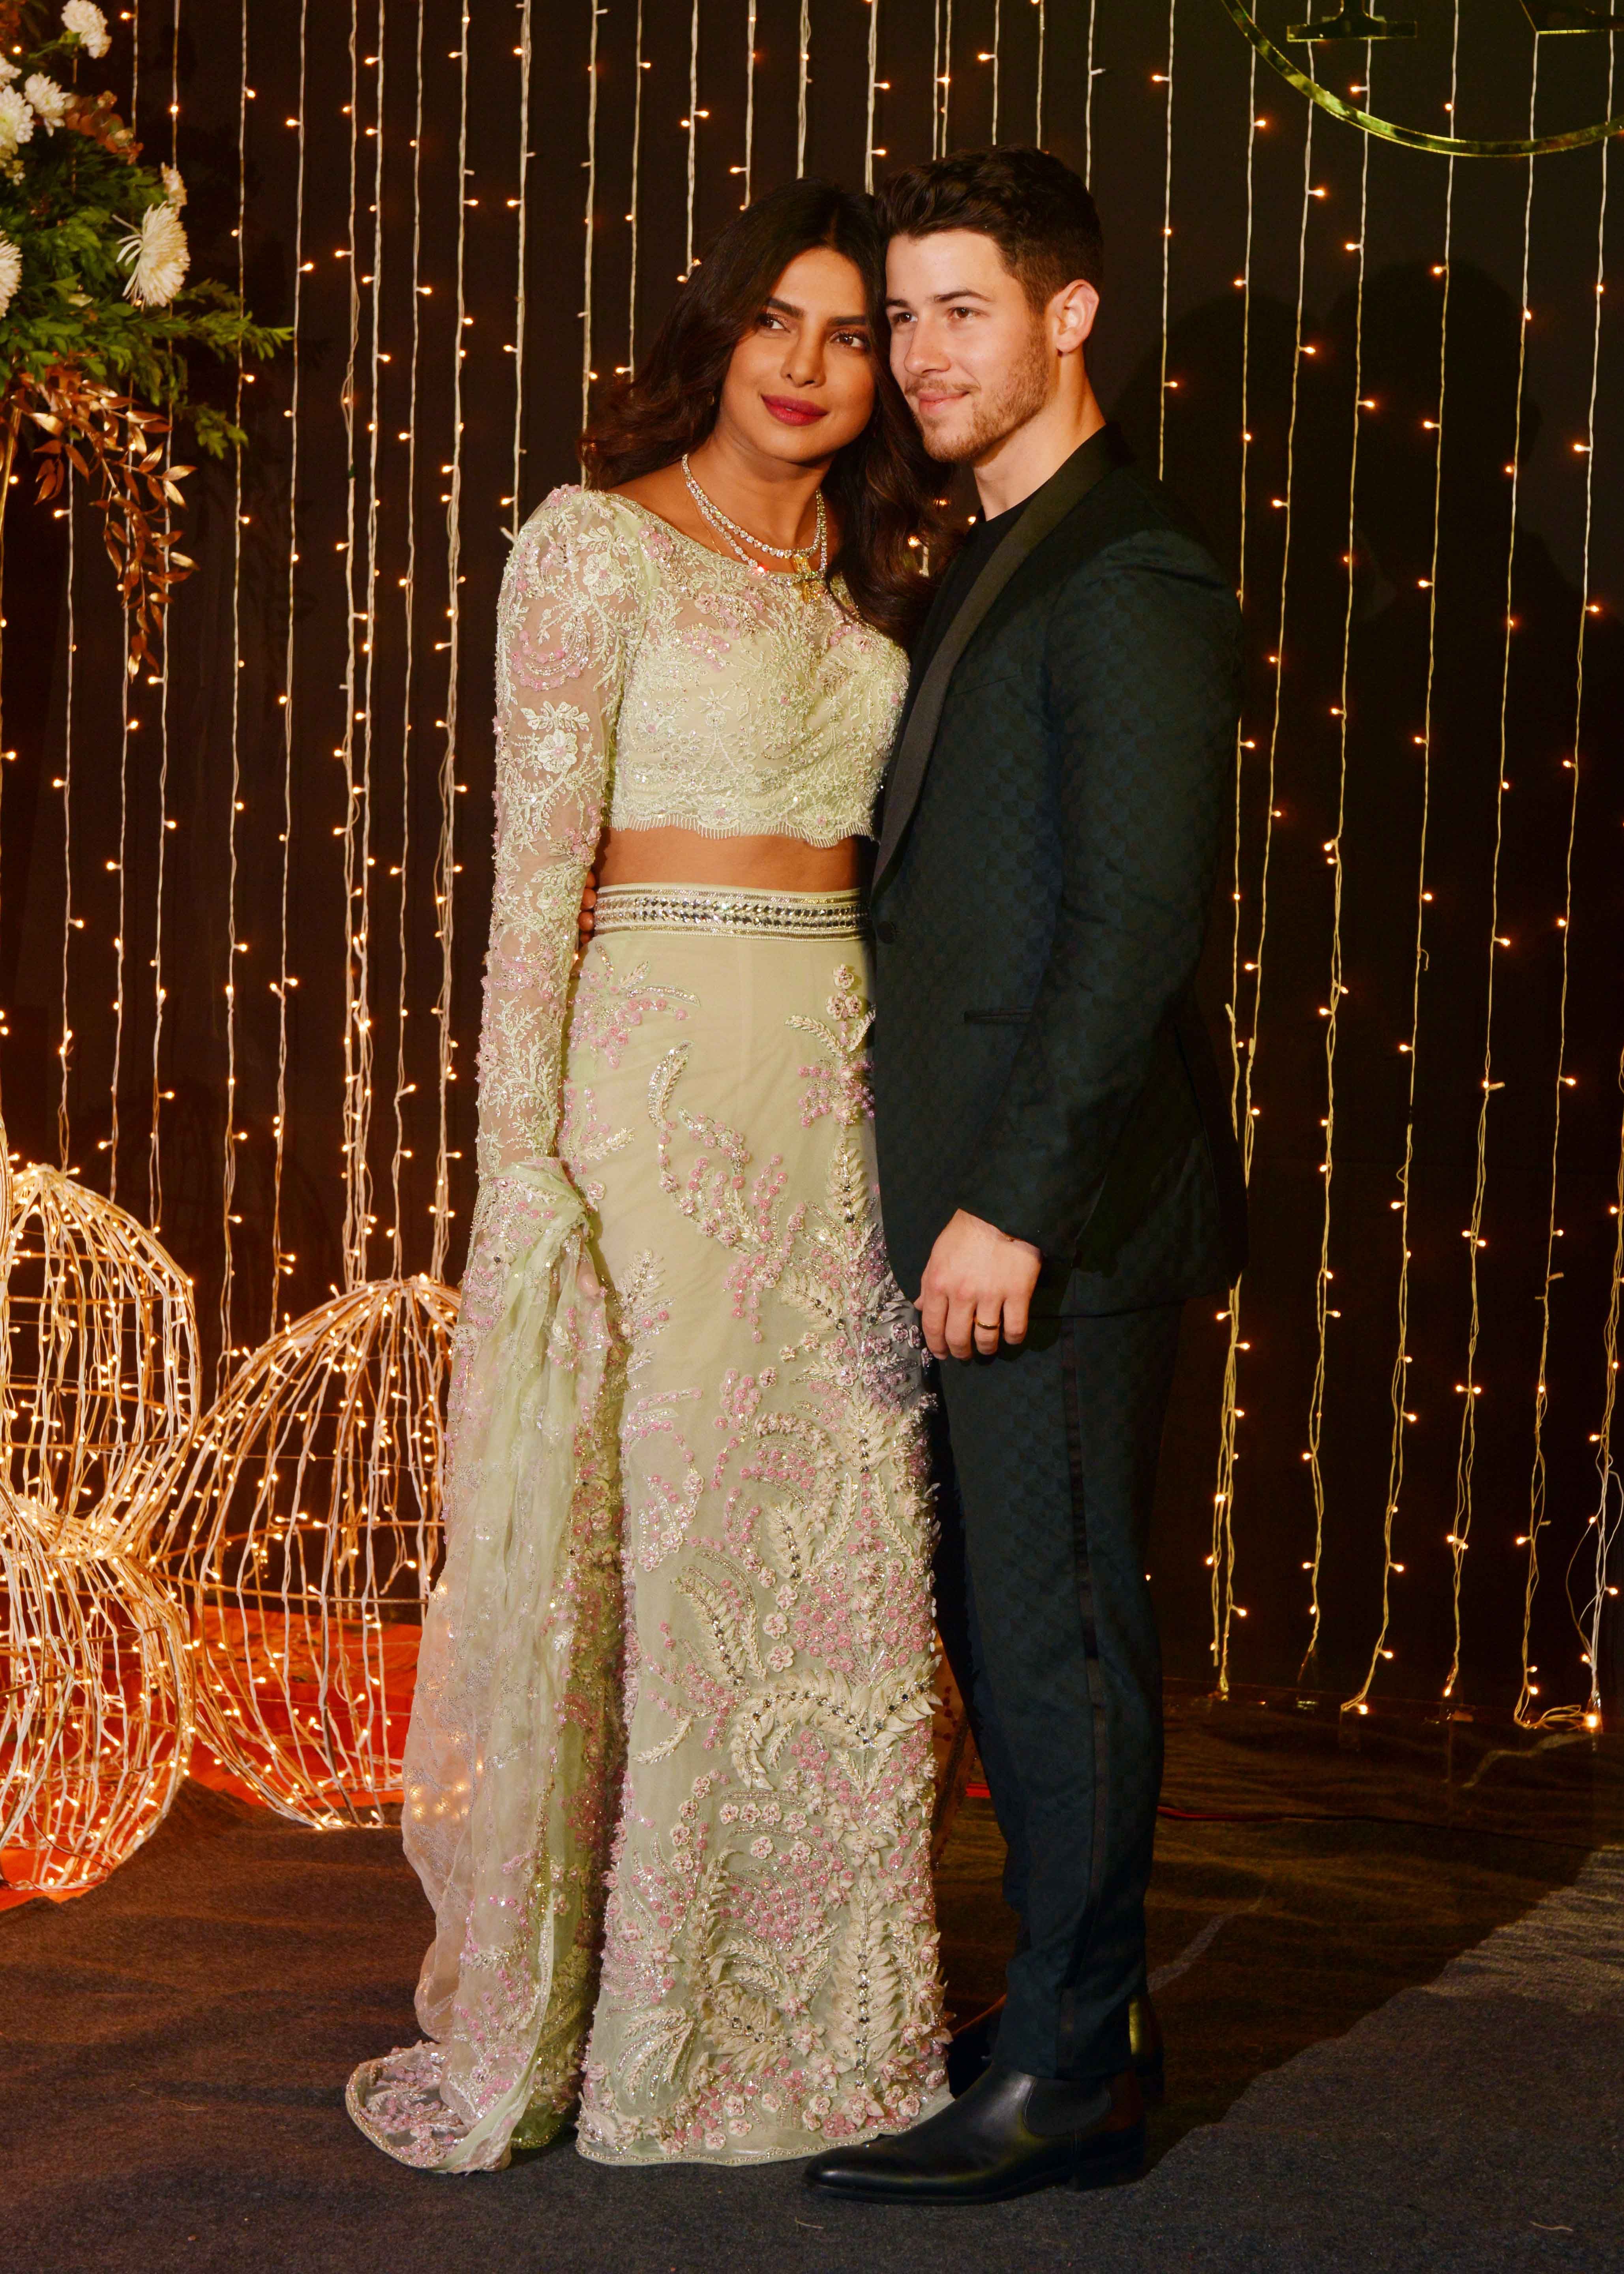 New videos reveal Priyanka Chopra\'s Wedding gown by Ralph Lauren had 8  words stitched in it like Nick Jonas\' actual name \'Nicholas Jerry  Jonas\', \'Om Namah Shivay\', \'Compassion, \'1st December 2018\'!